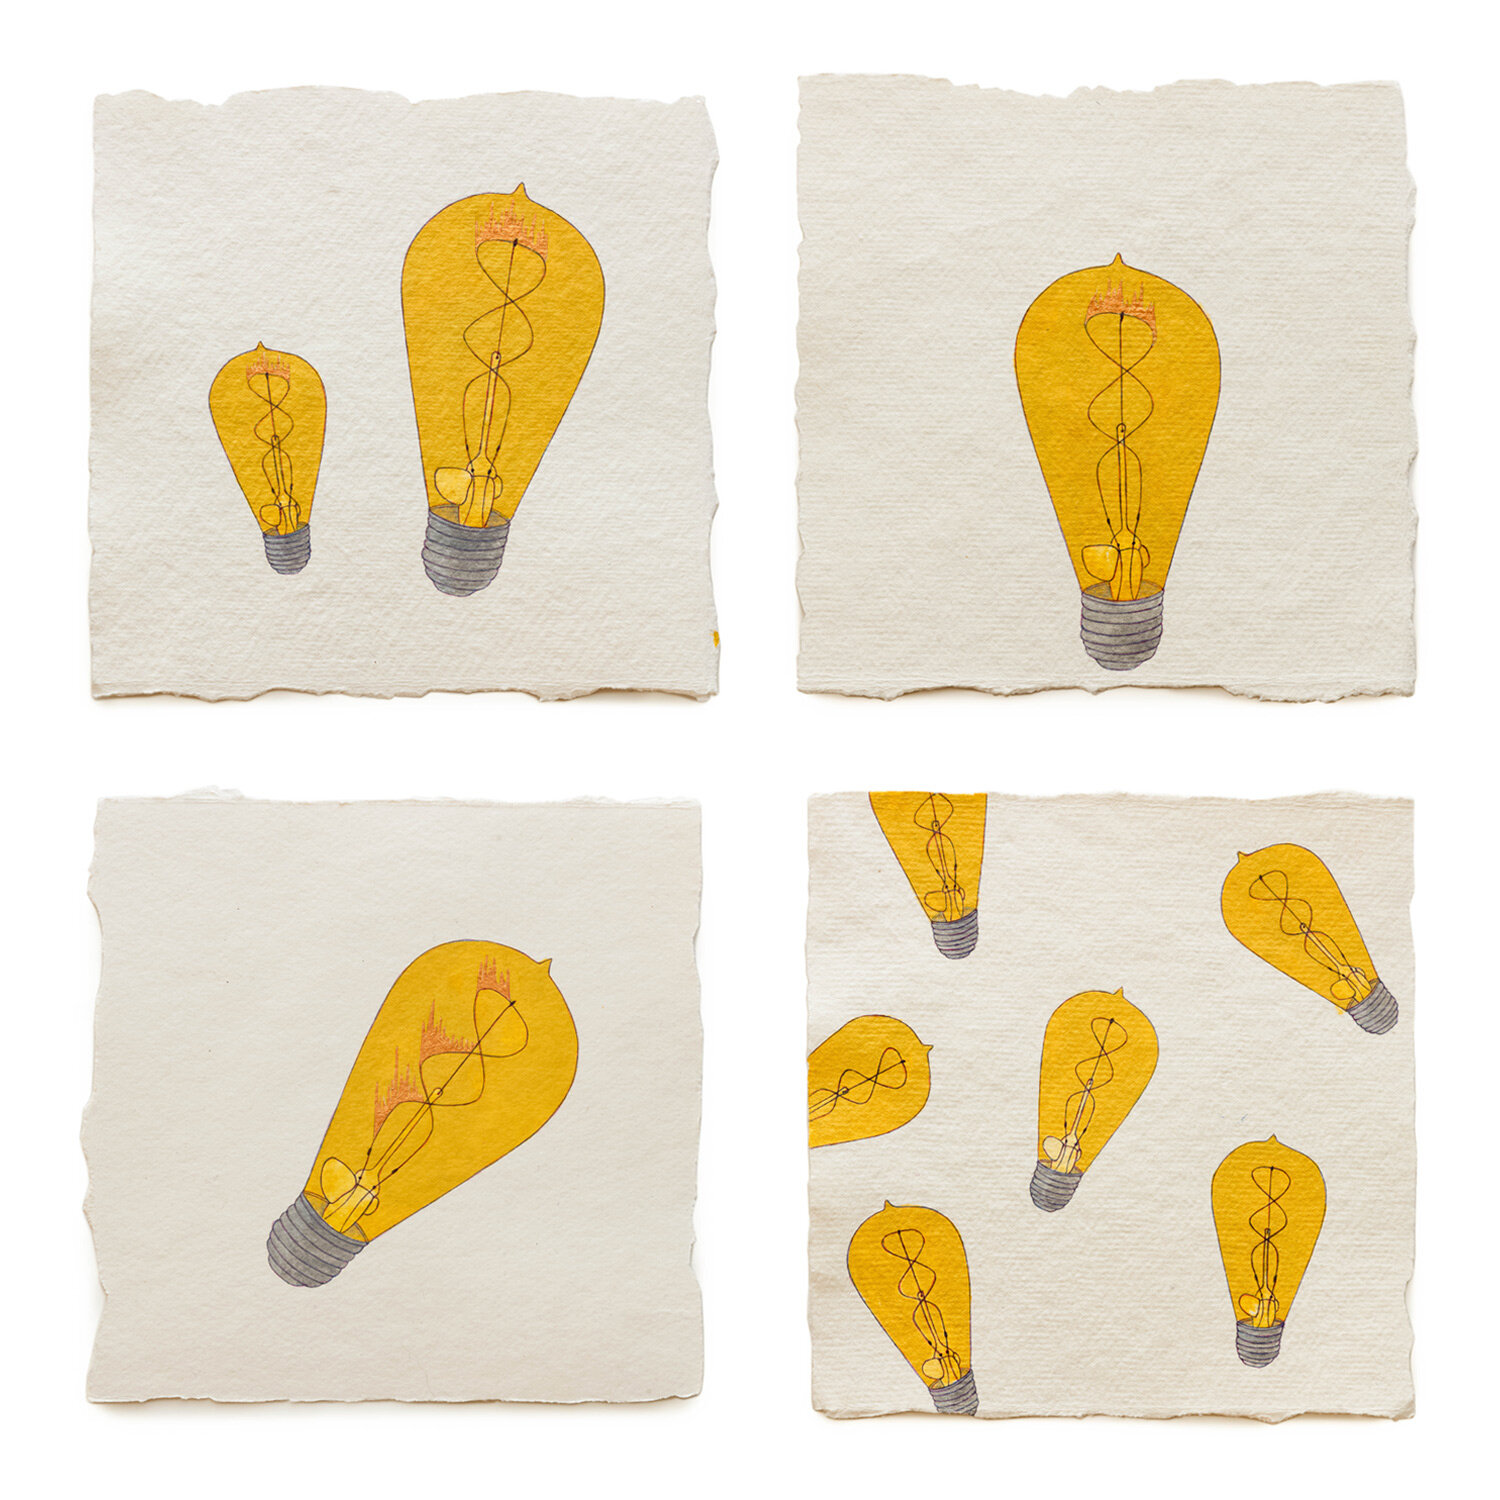   Fire Diary (Dying Bulbs),  2020 Acrylic on paper, 6” x 6” each 